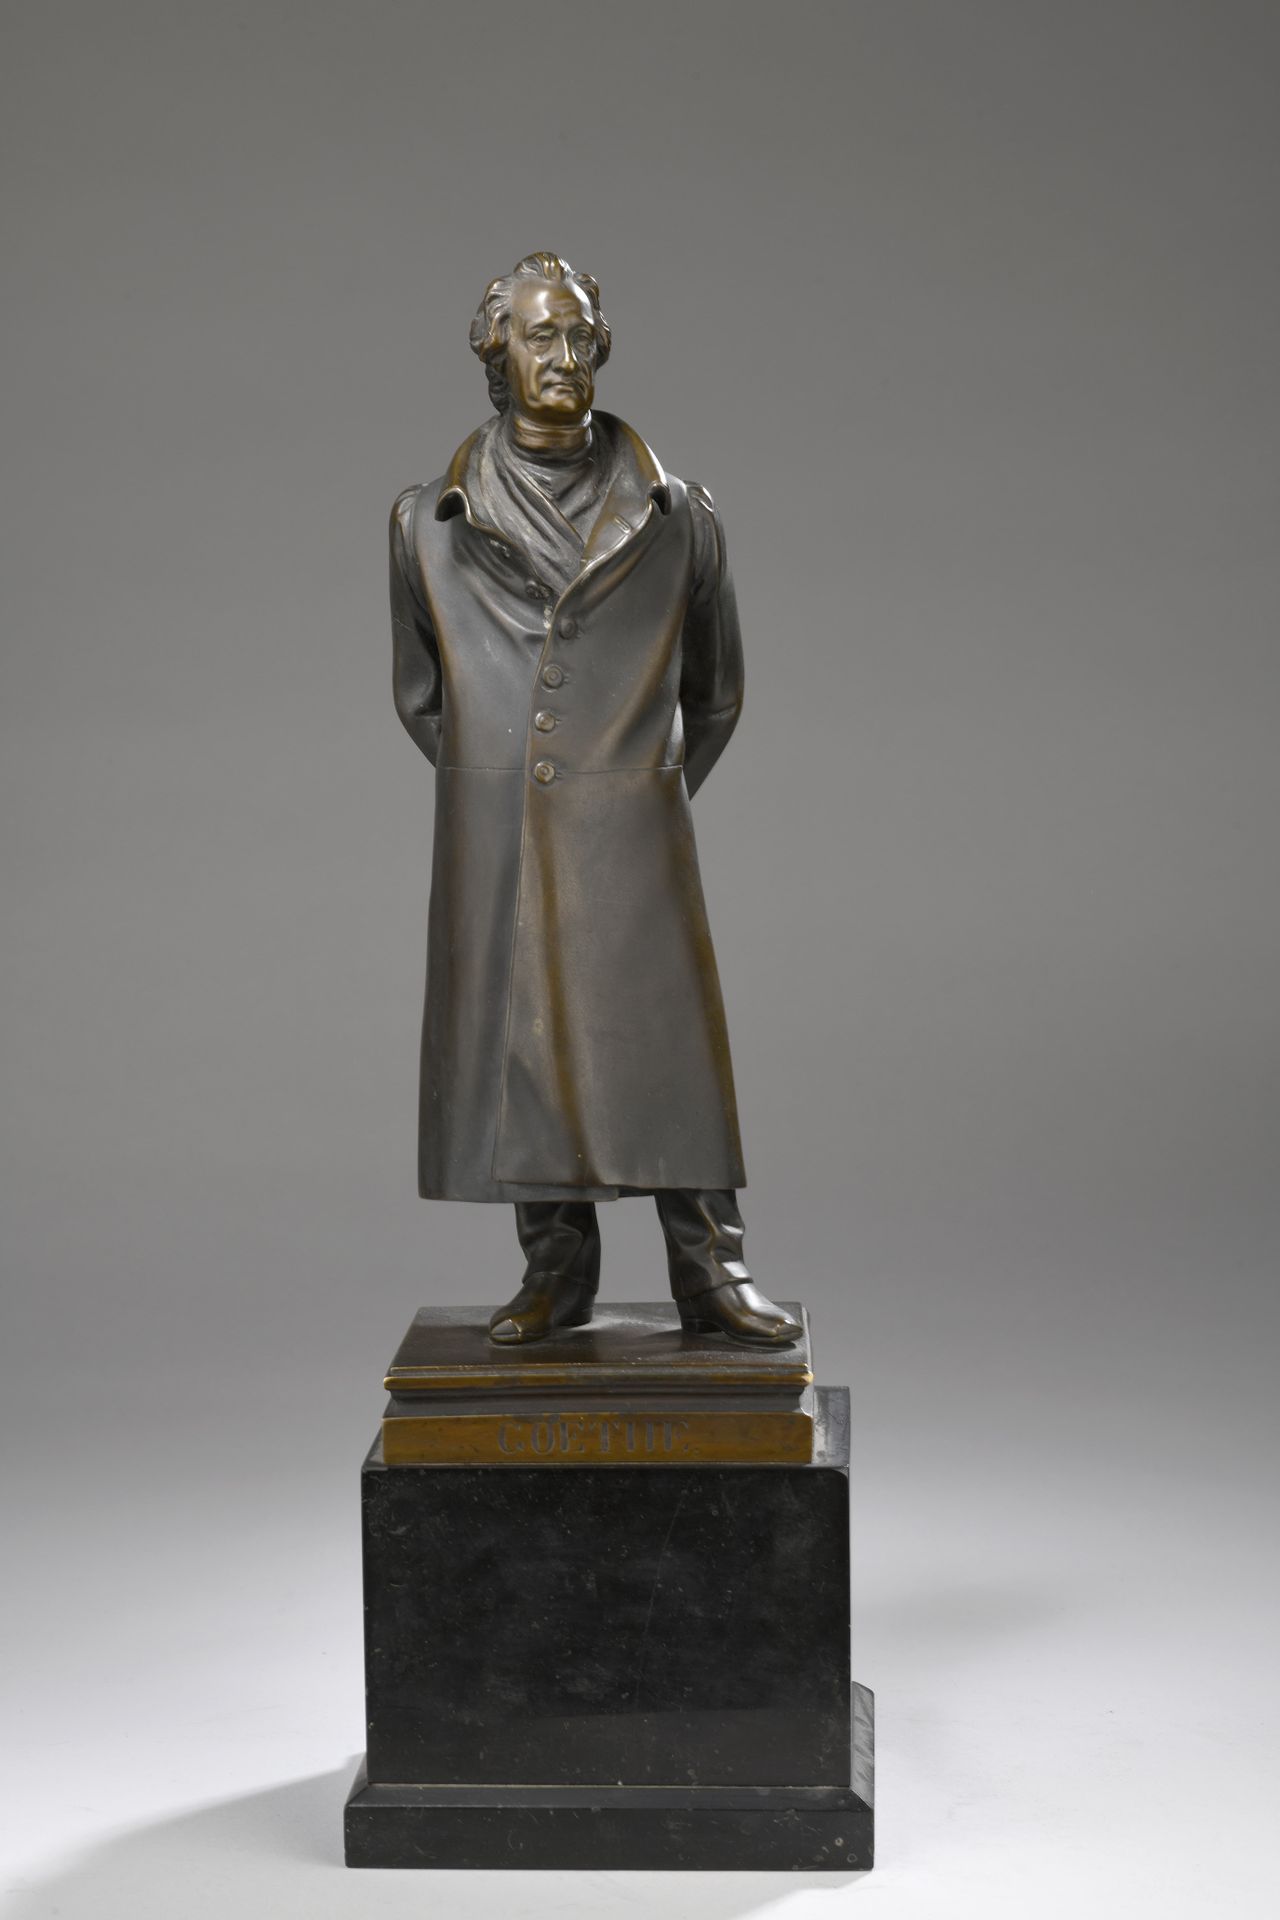 Null 克里斯蒂安-丹尼尔-劳赫(1777-1857)
约翰-沃尔夫冈-冯-歌德 (1759-1832)
模型创作于1828年
青铜，带有浅棕色的铜锈 
署名&hellip;